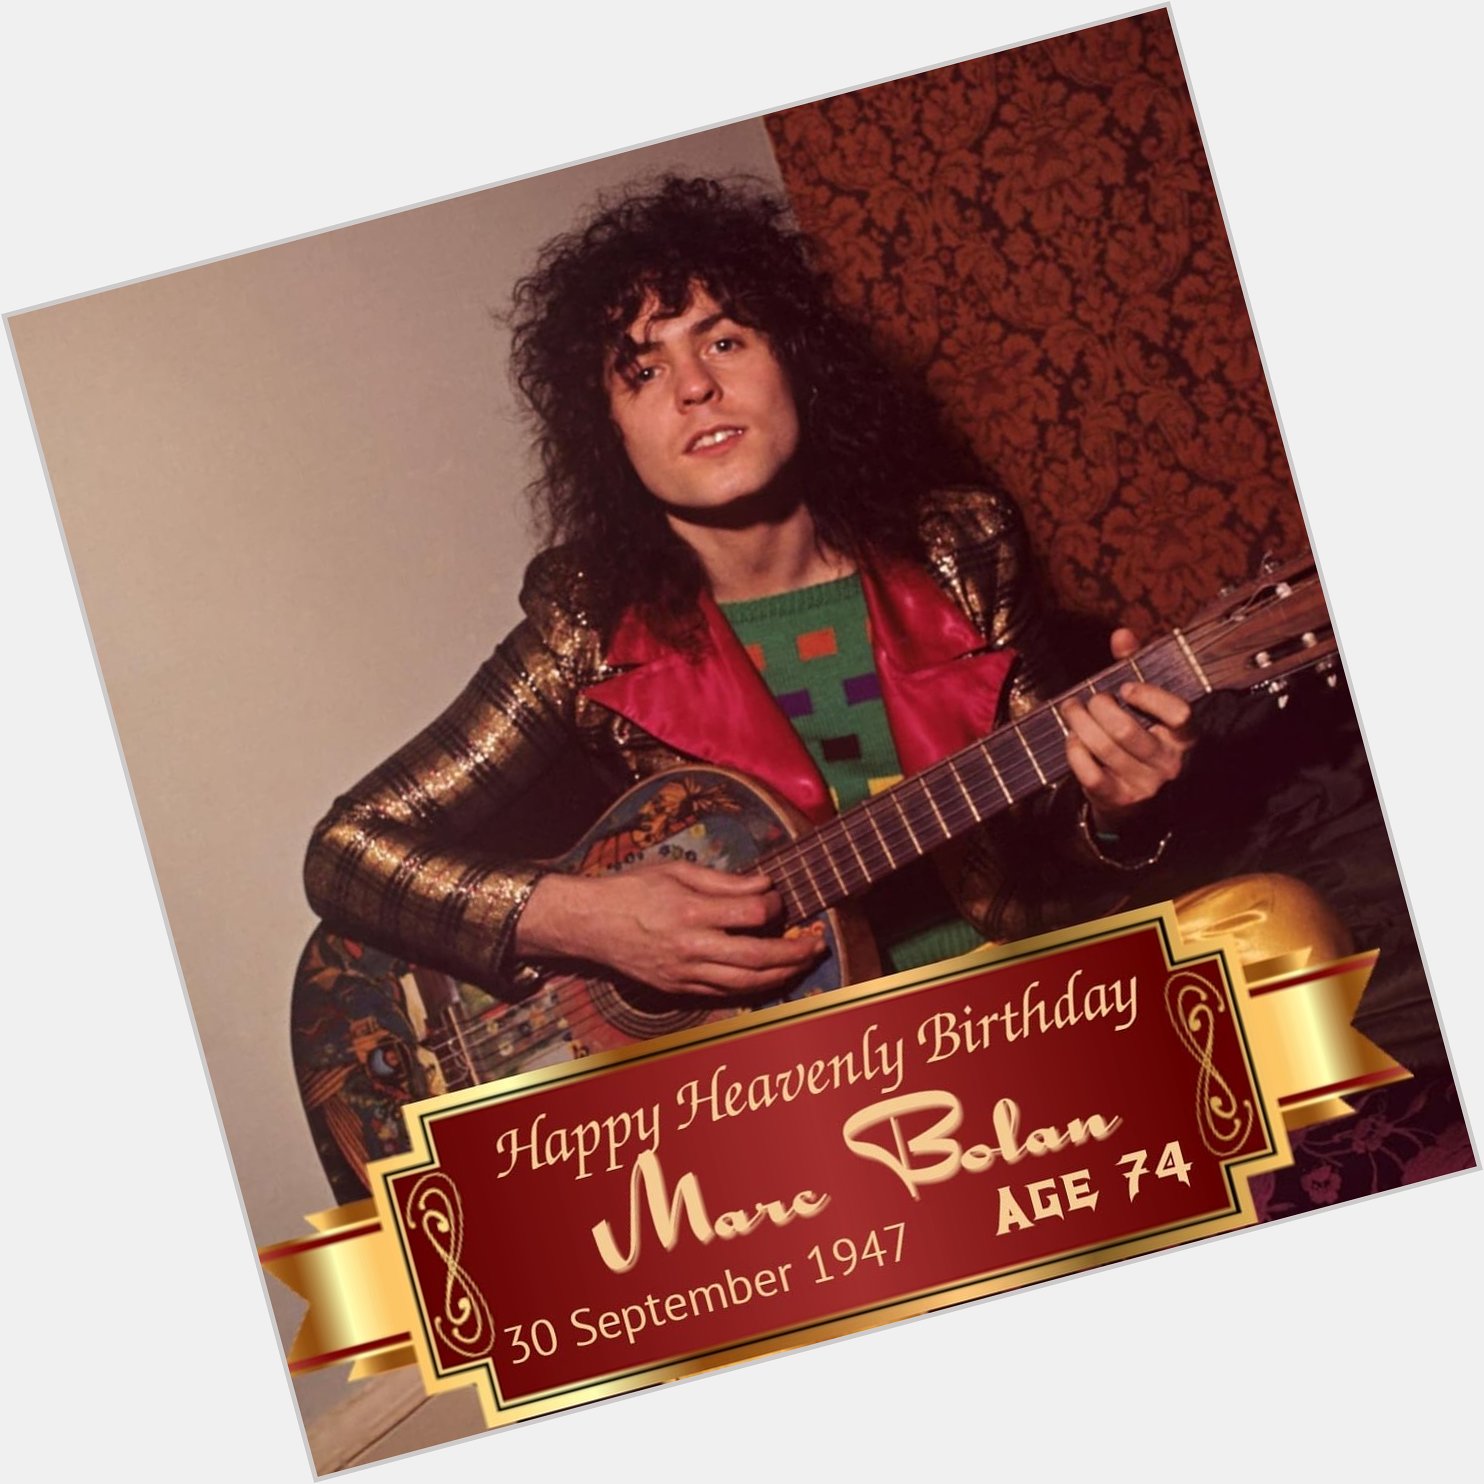 Happy Heavenly Birthday to Marc Bolan    